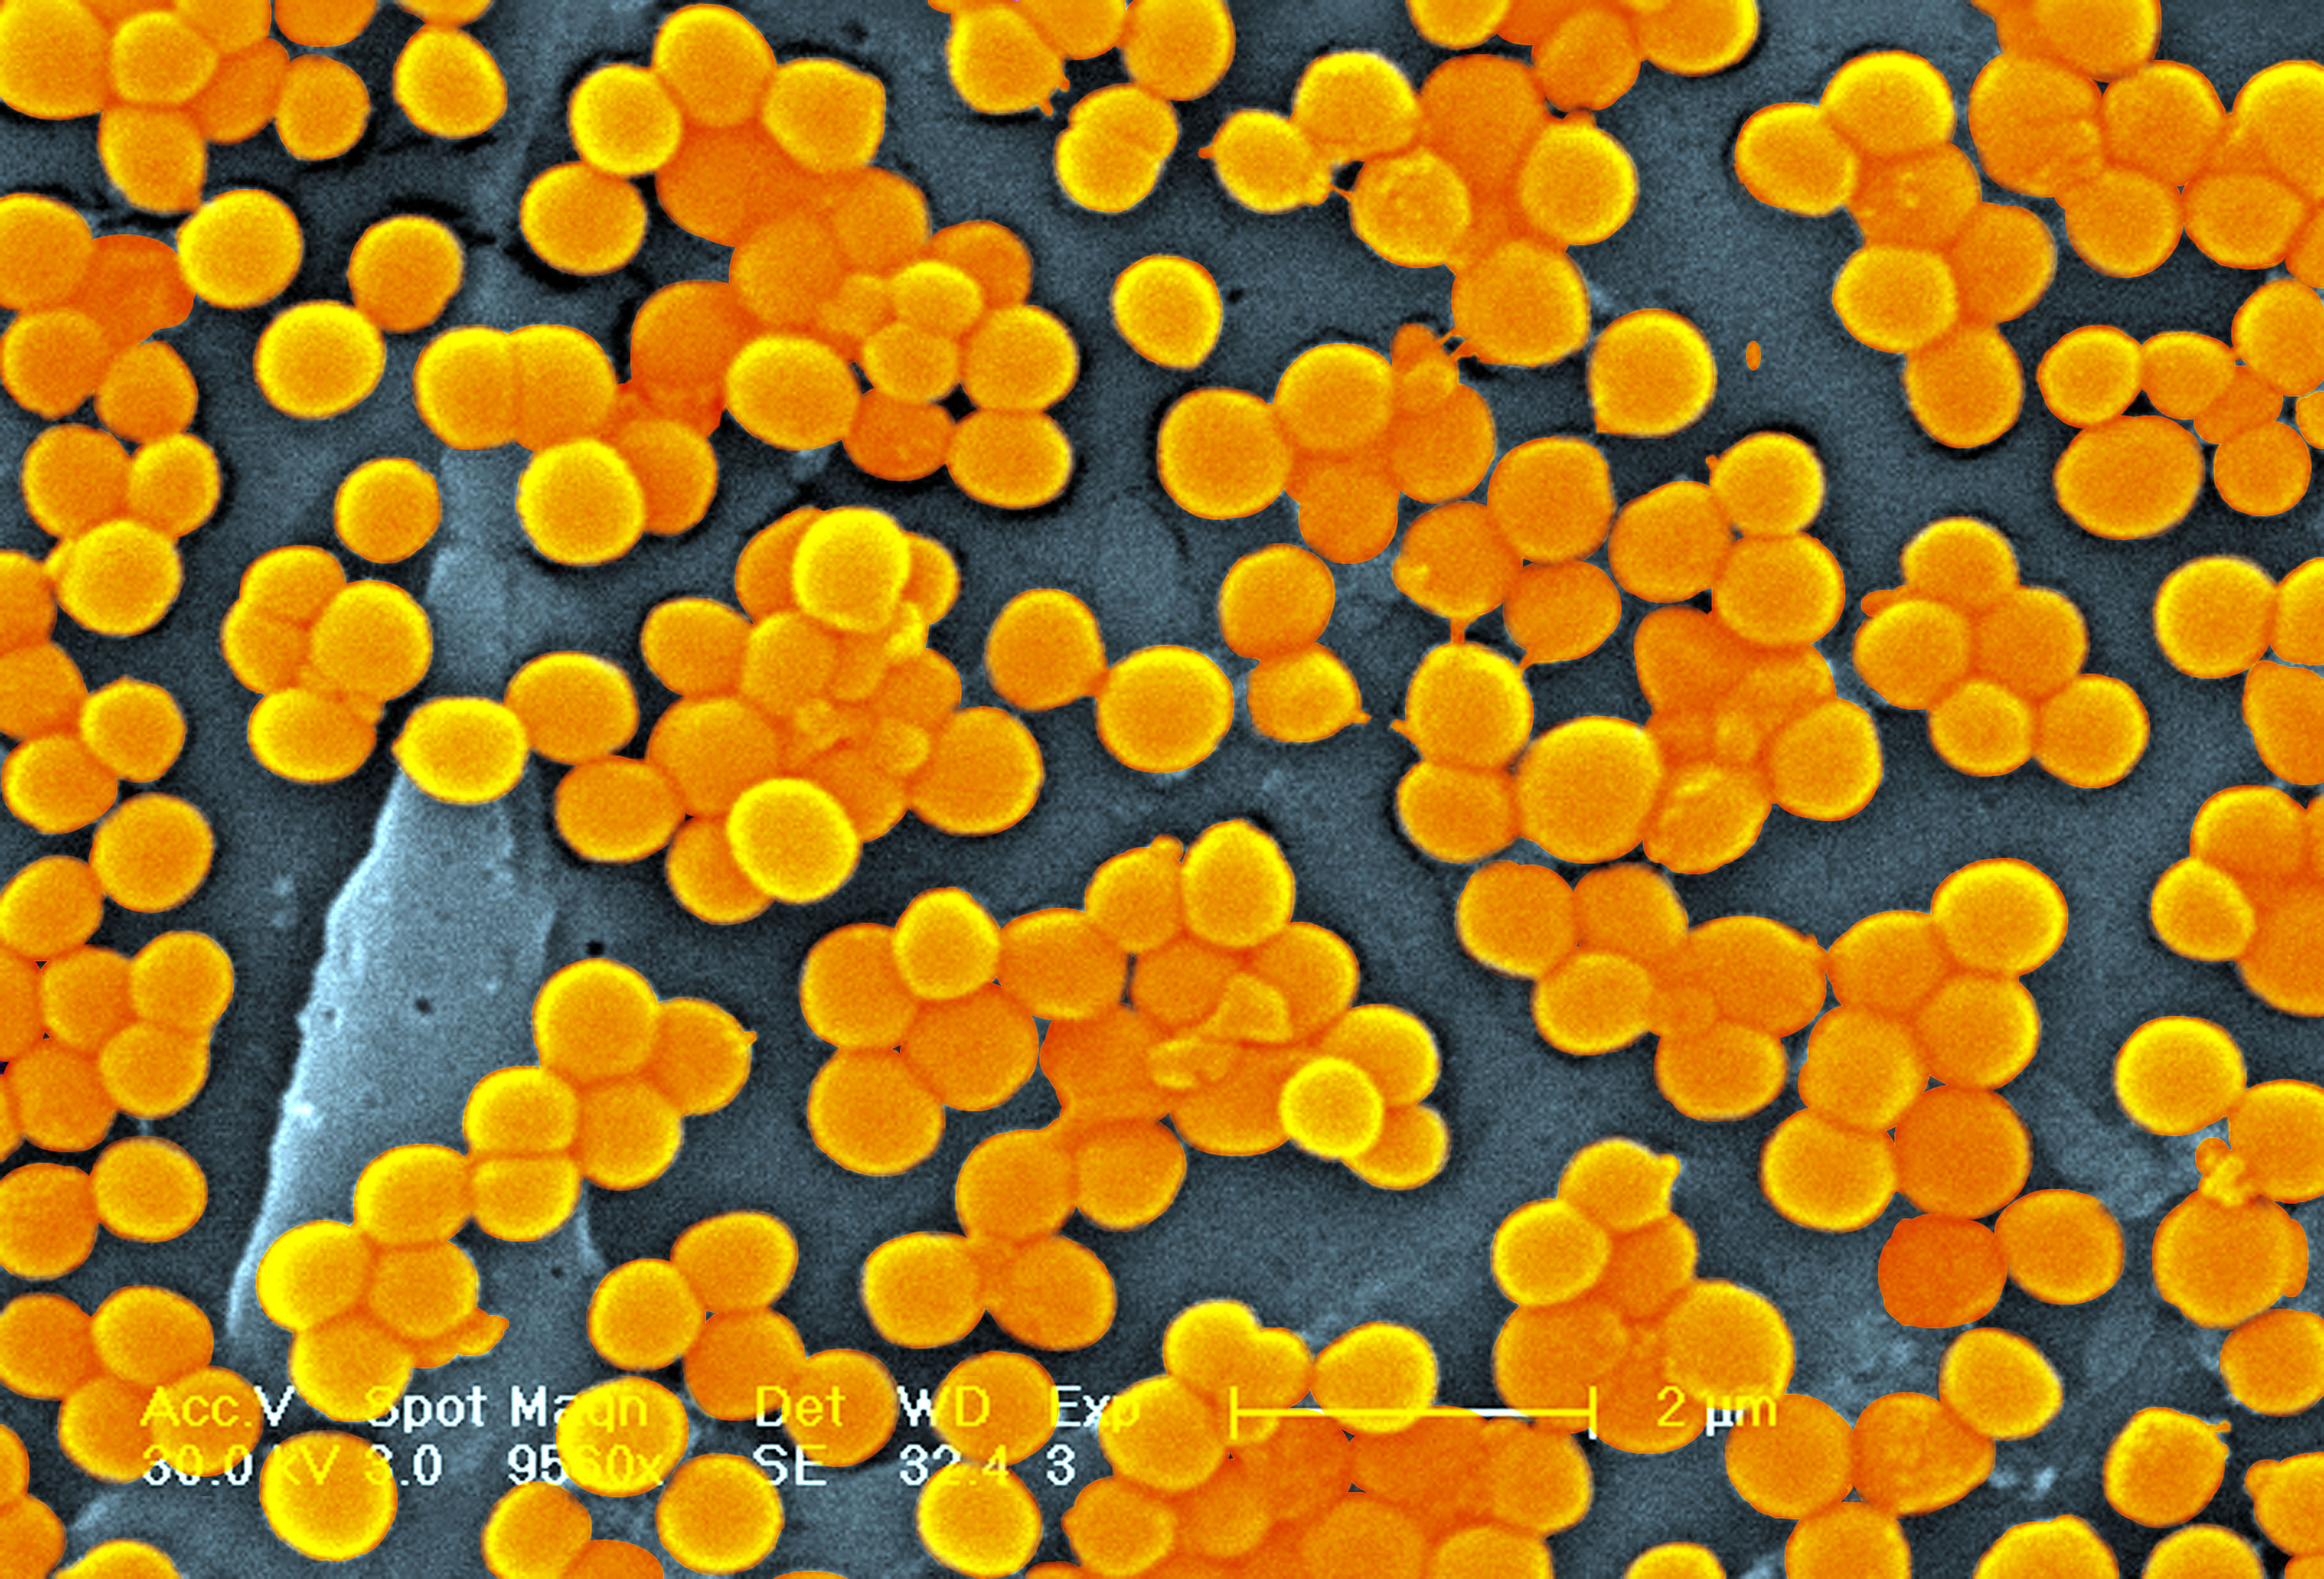 Methicillin-Resistant Staphylococcus Aureus (MRSA). (BSIP&mdash;UIG via Getty Images)